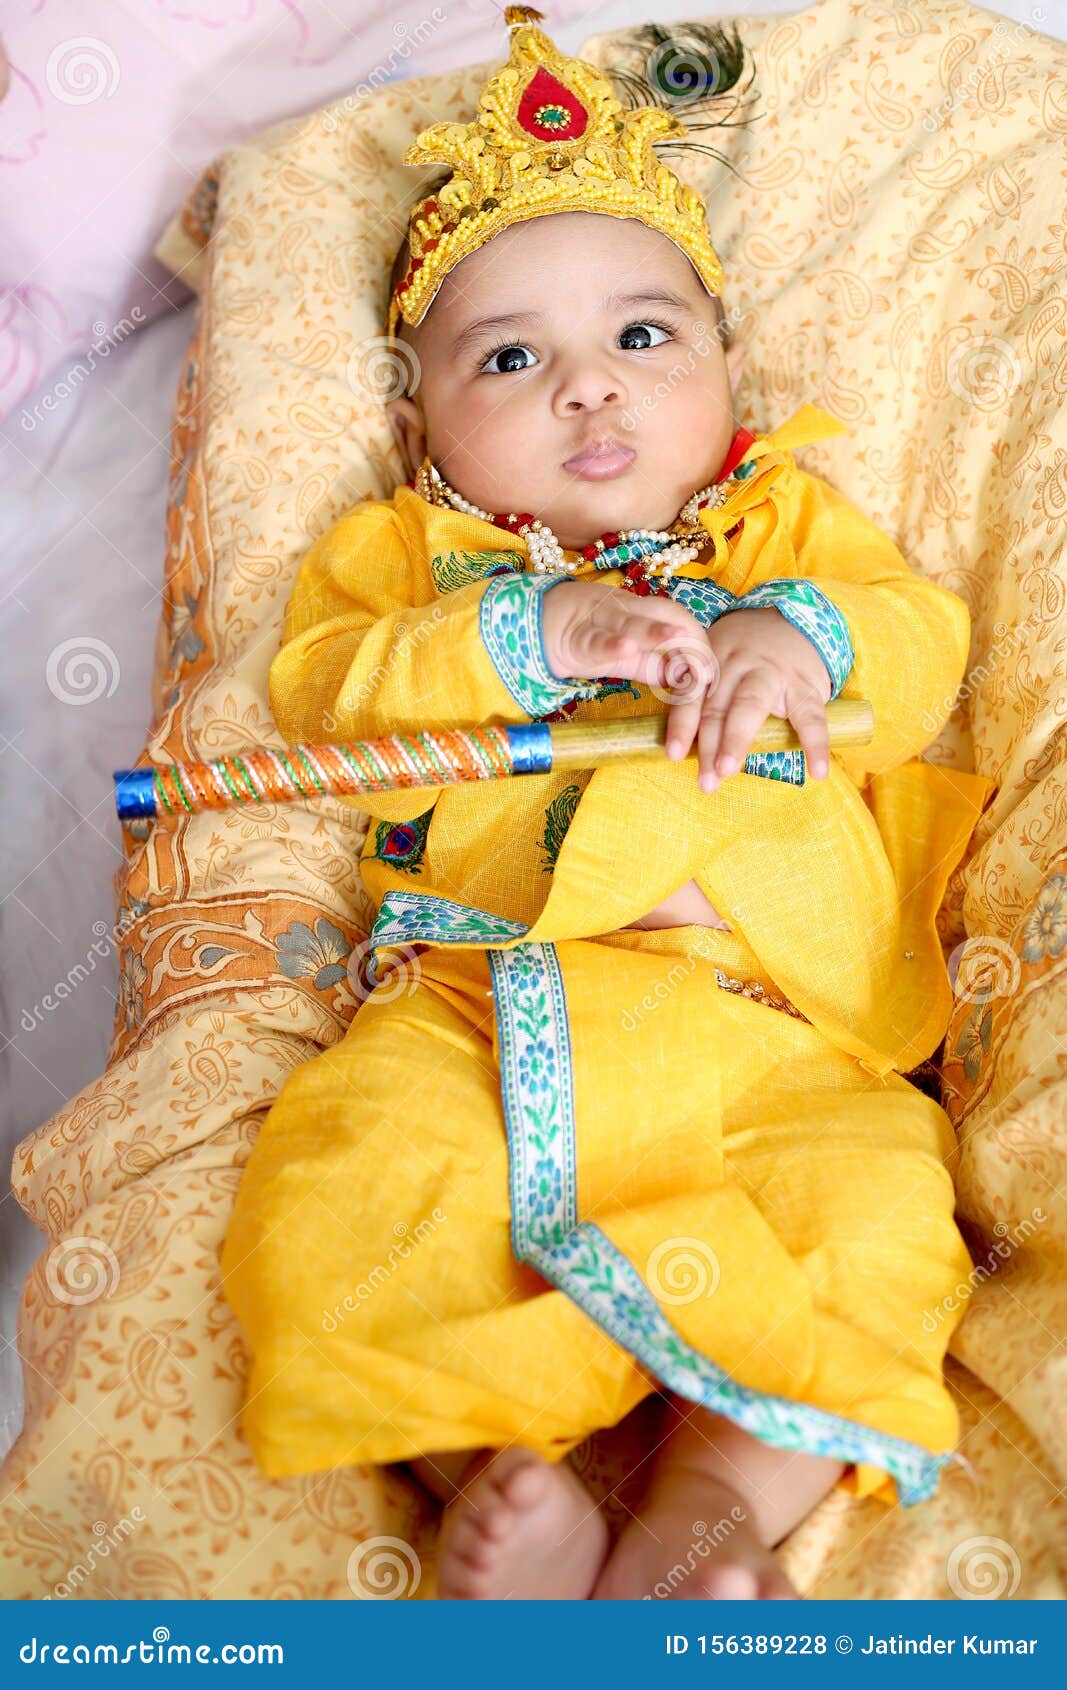 Picture of Baby krishna. stock photo. Image of children - 156389228